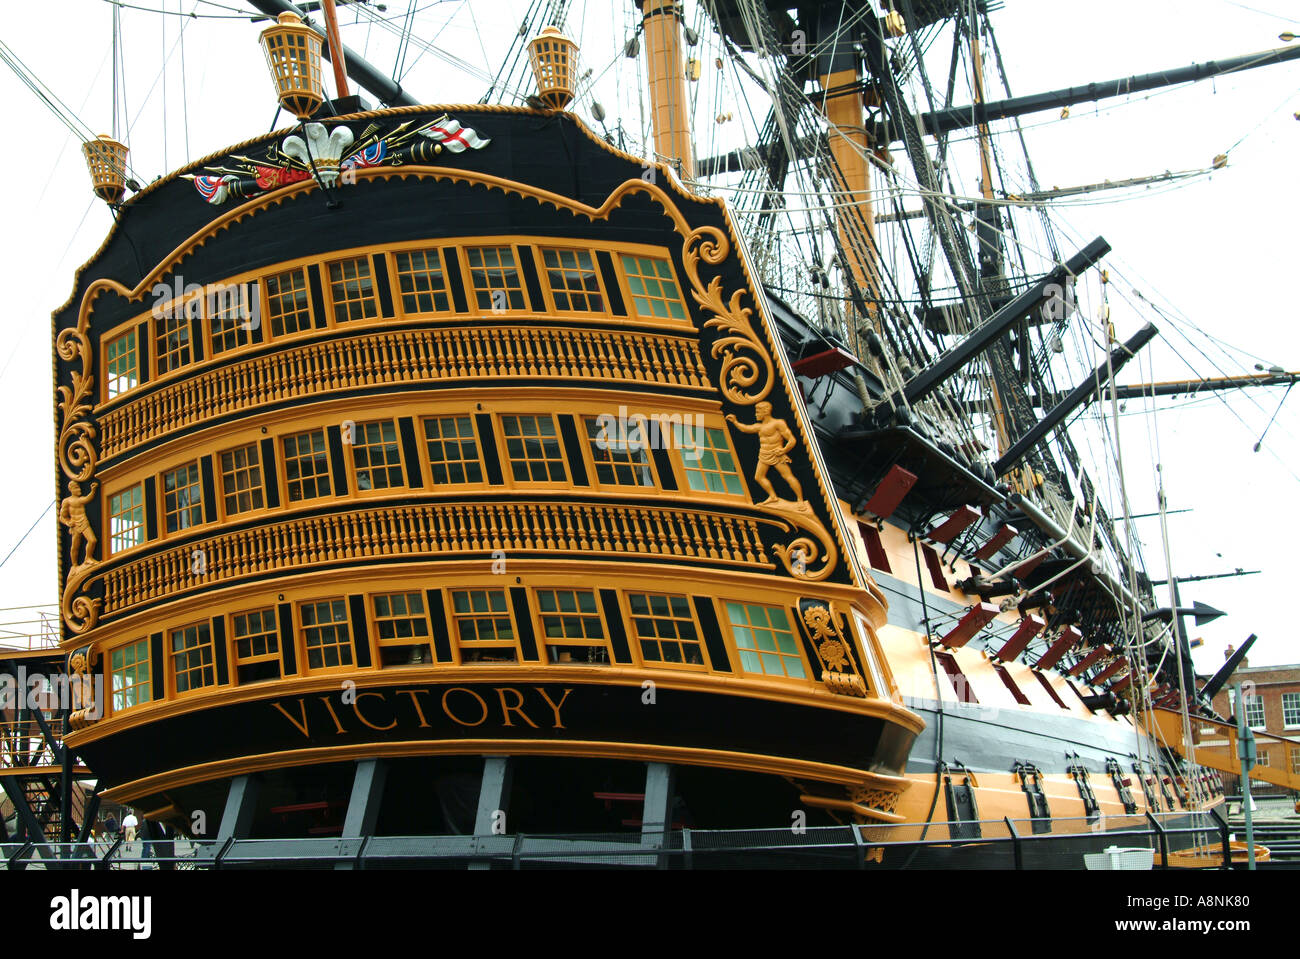 HMS Victory Lord Horatio Nelson Ship Battle of Trafalgar 1805 Stock Photo